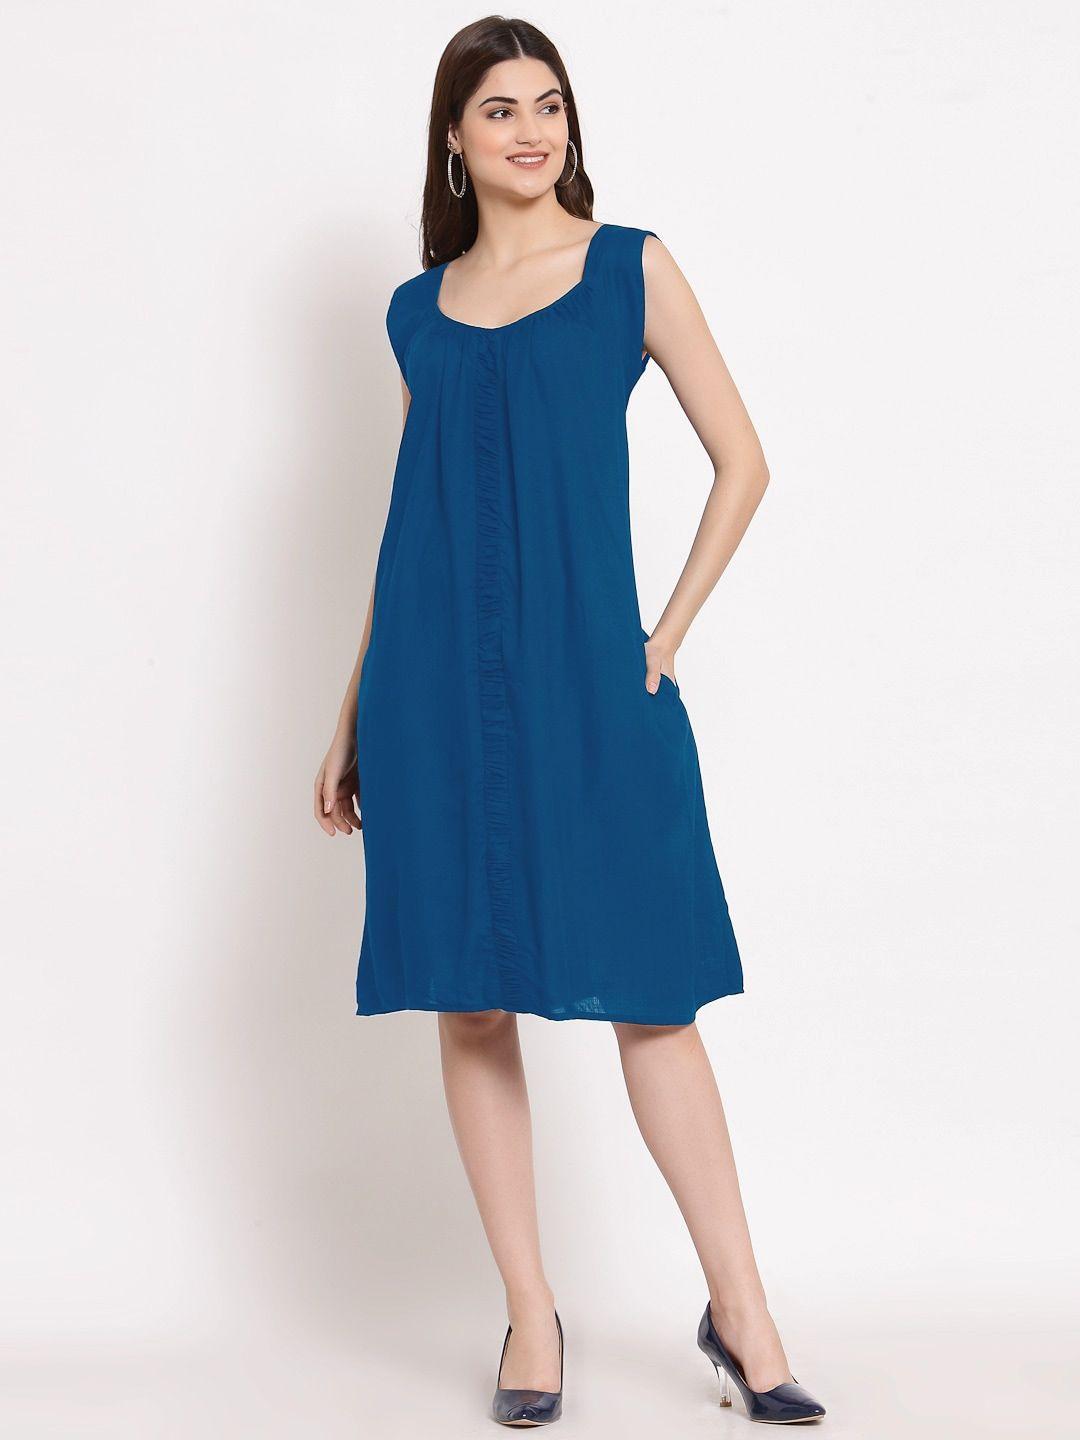 PATRORNA Sleeveless Cotton A-Line Dress